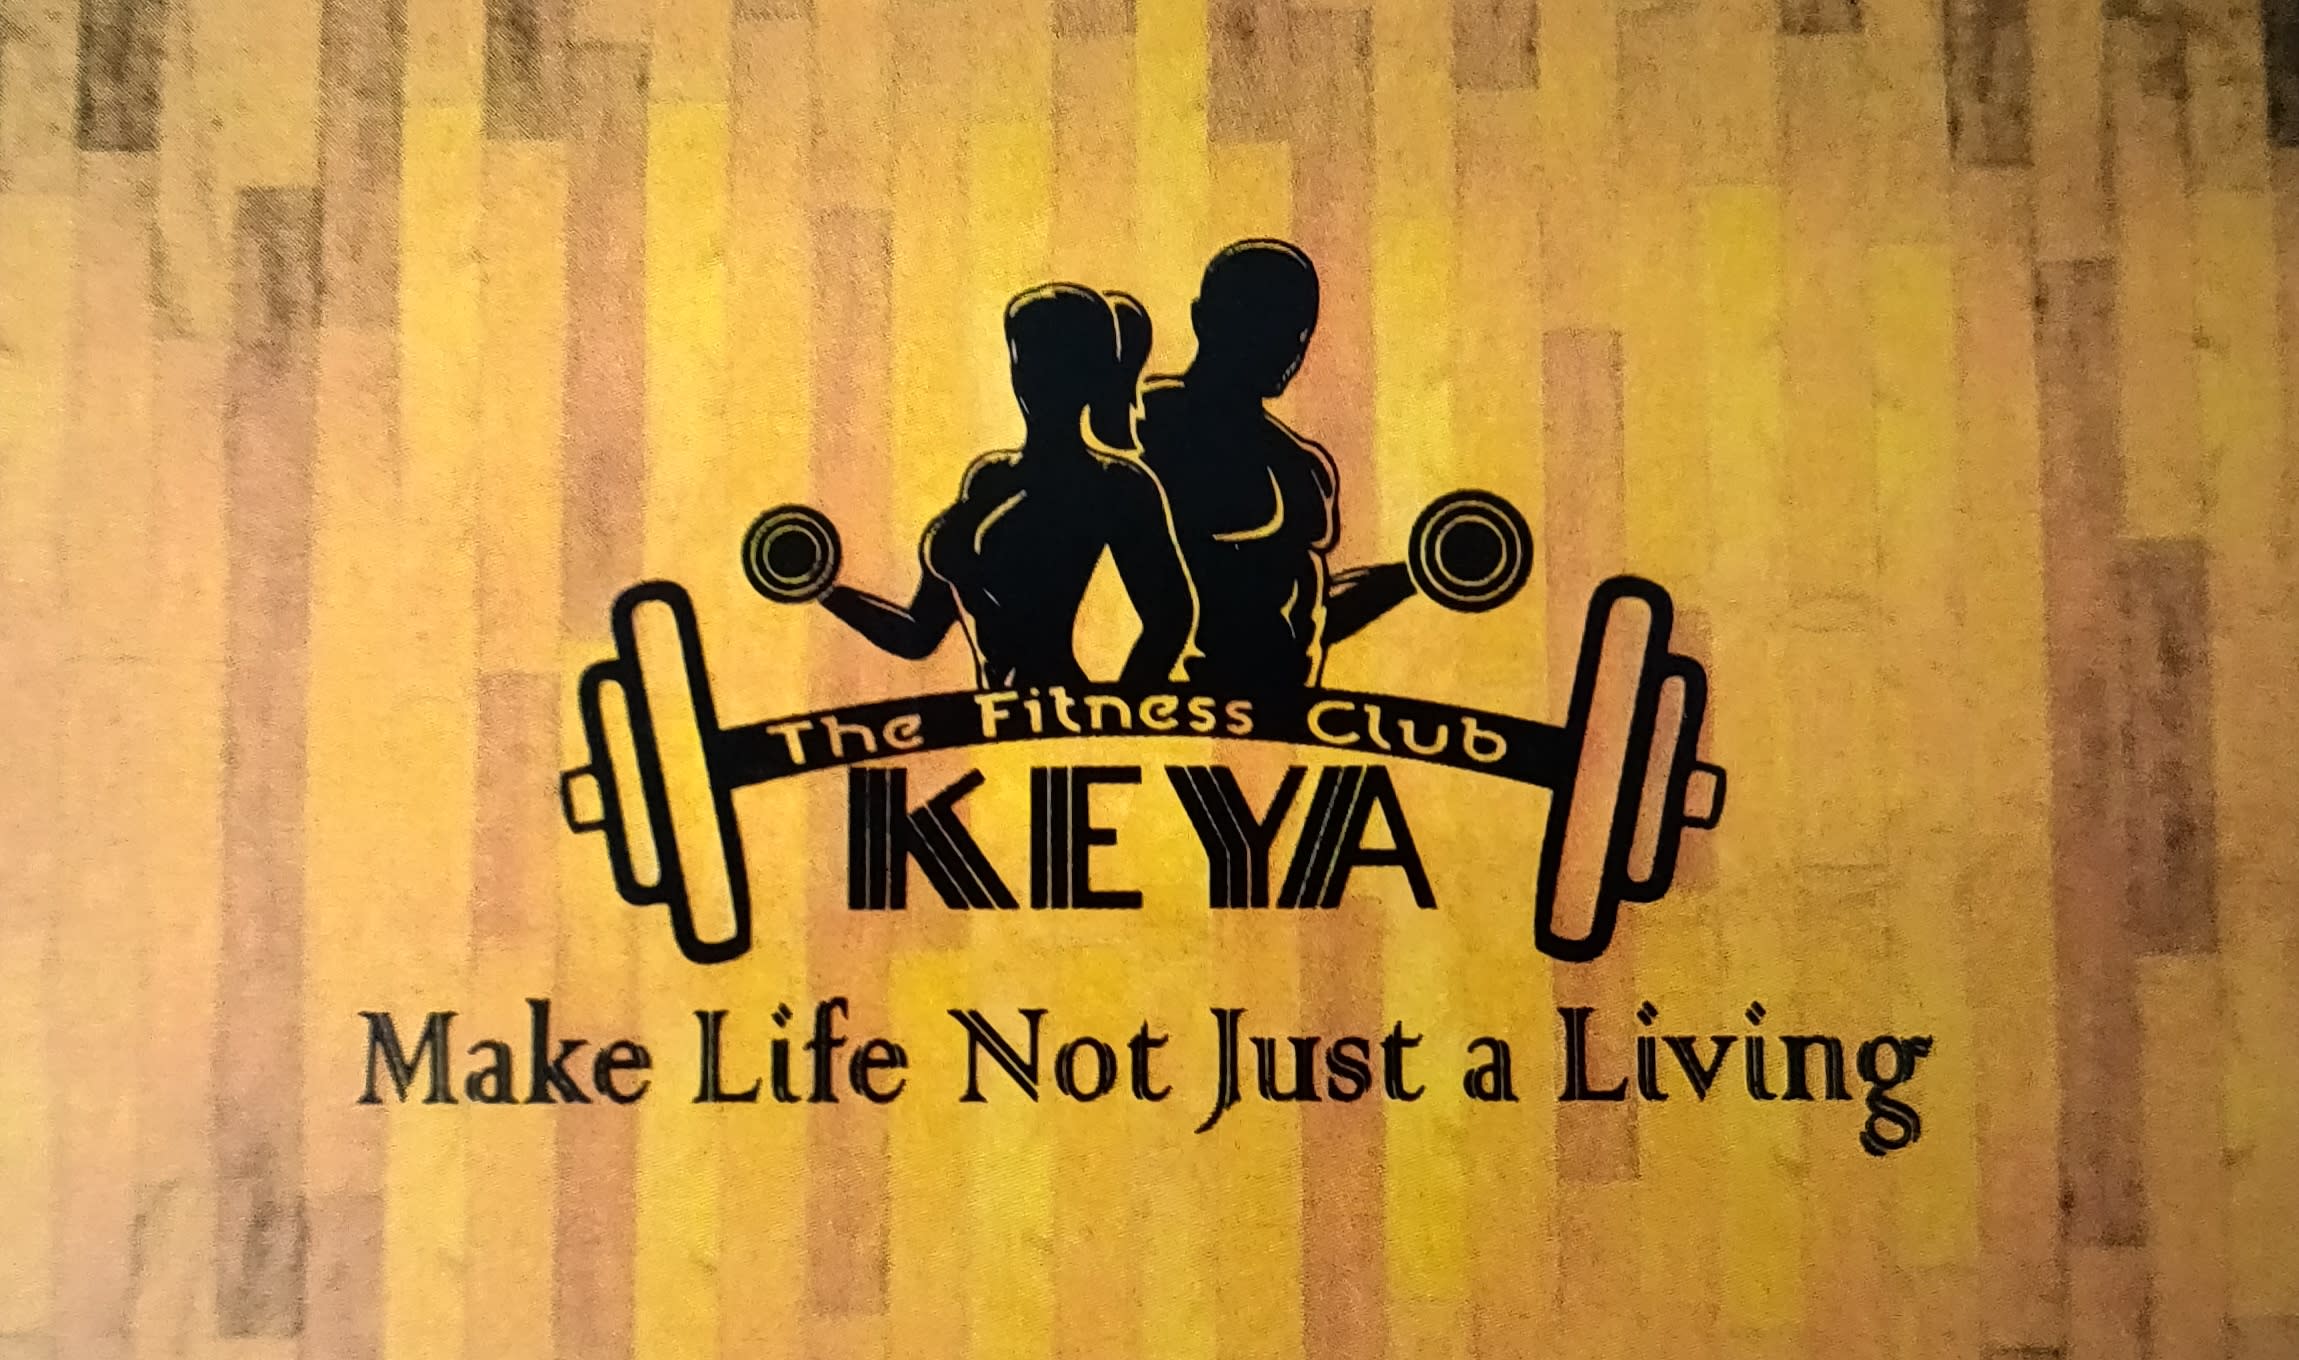 Keya, The Fitness Club